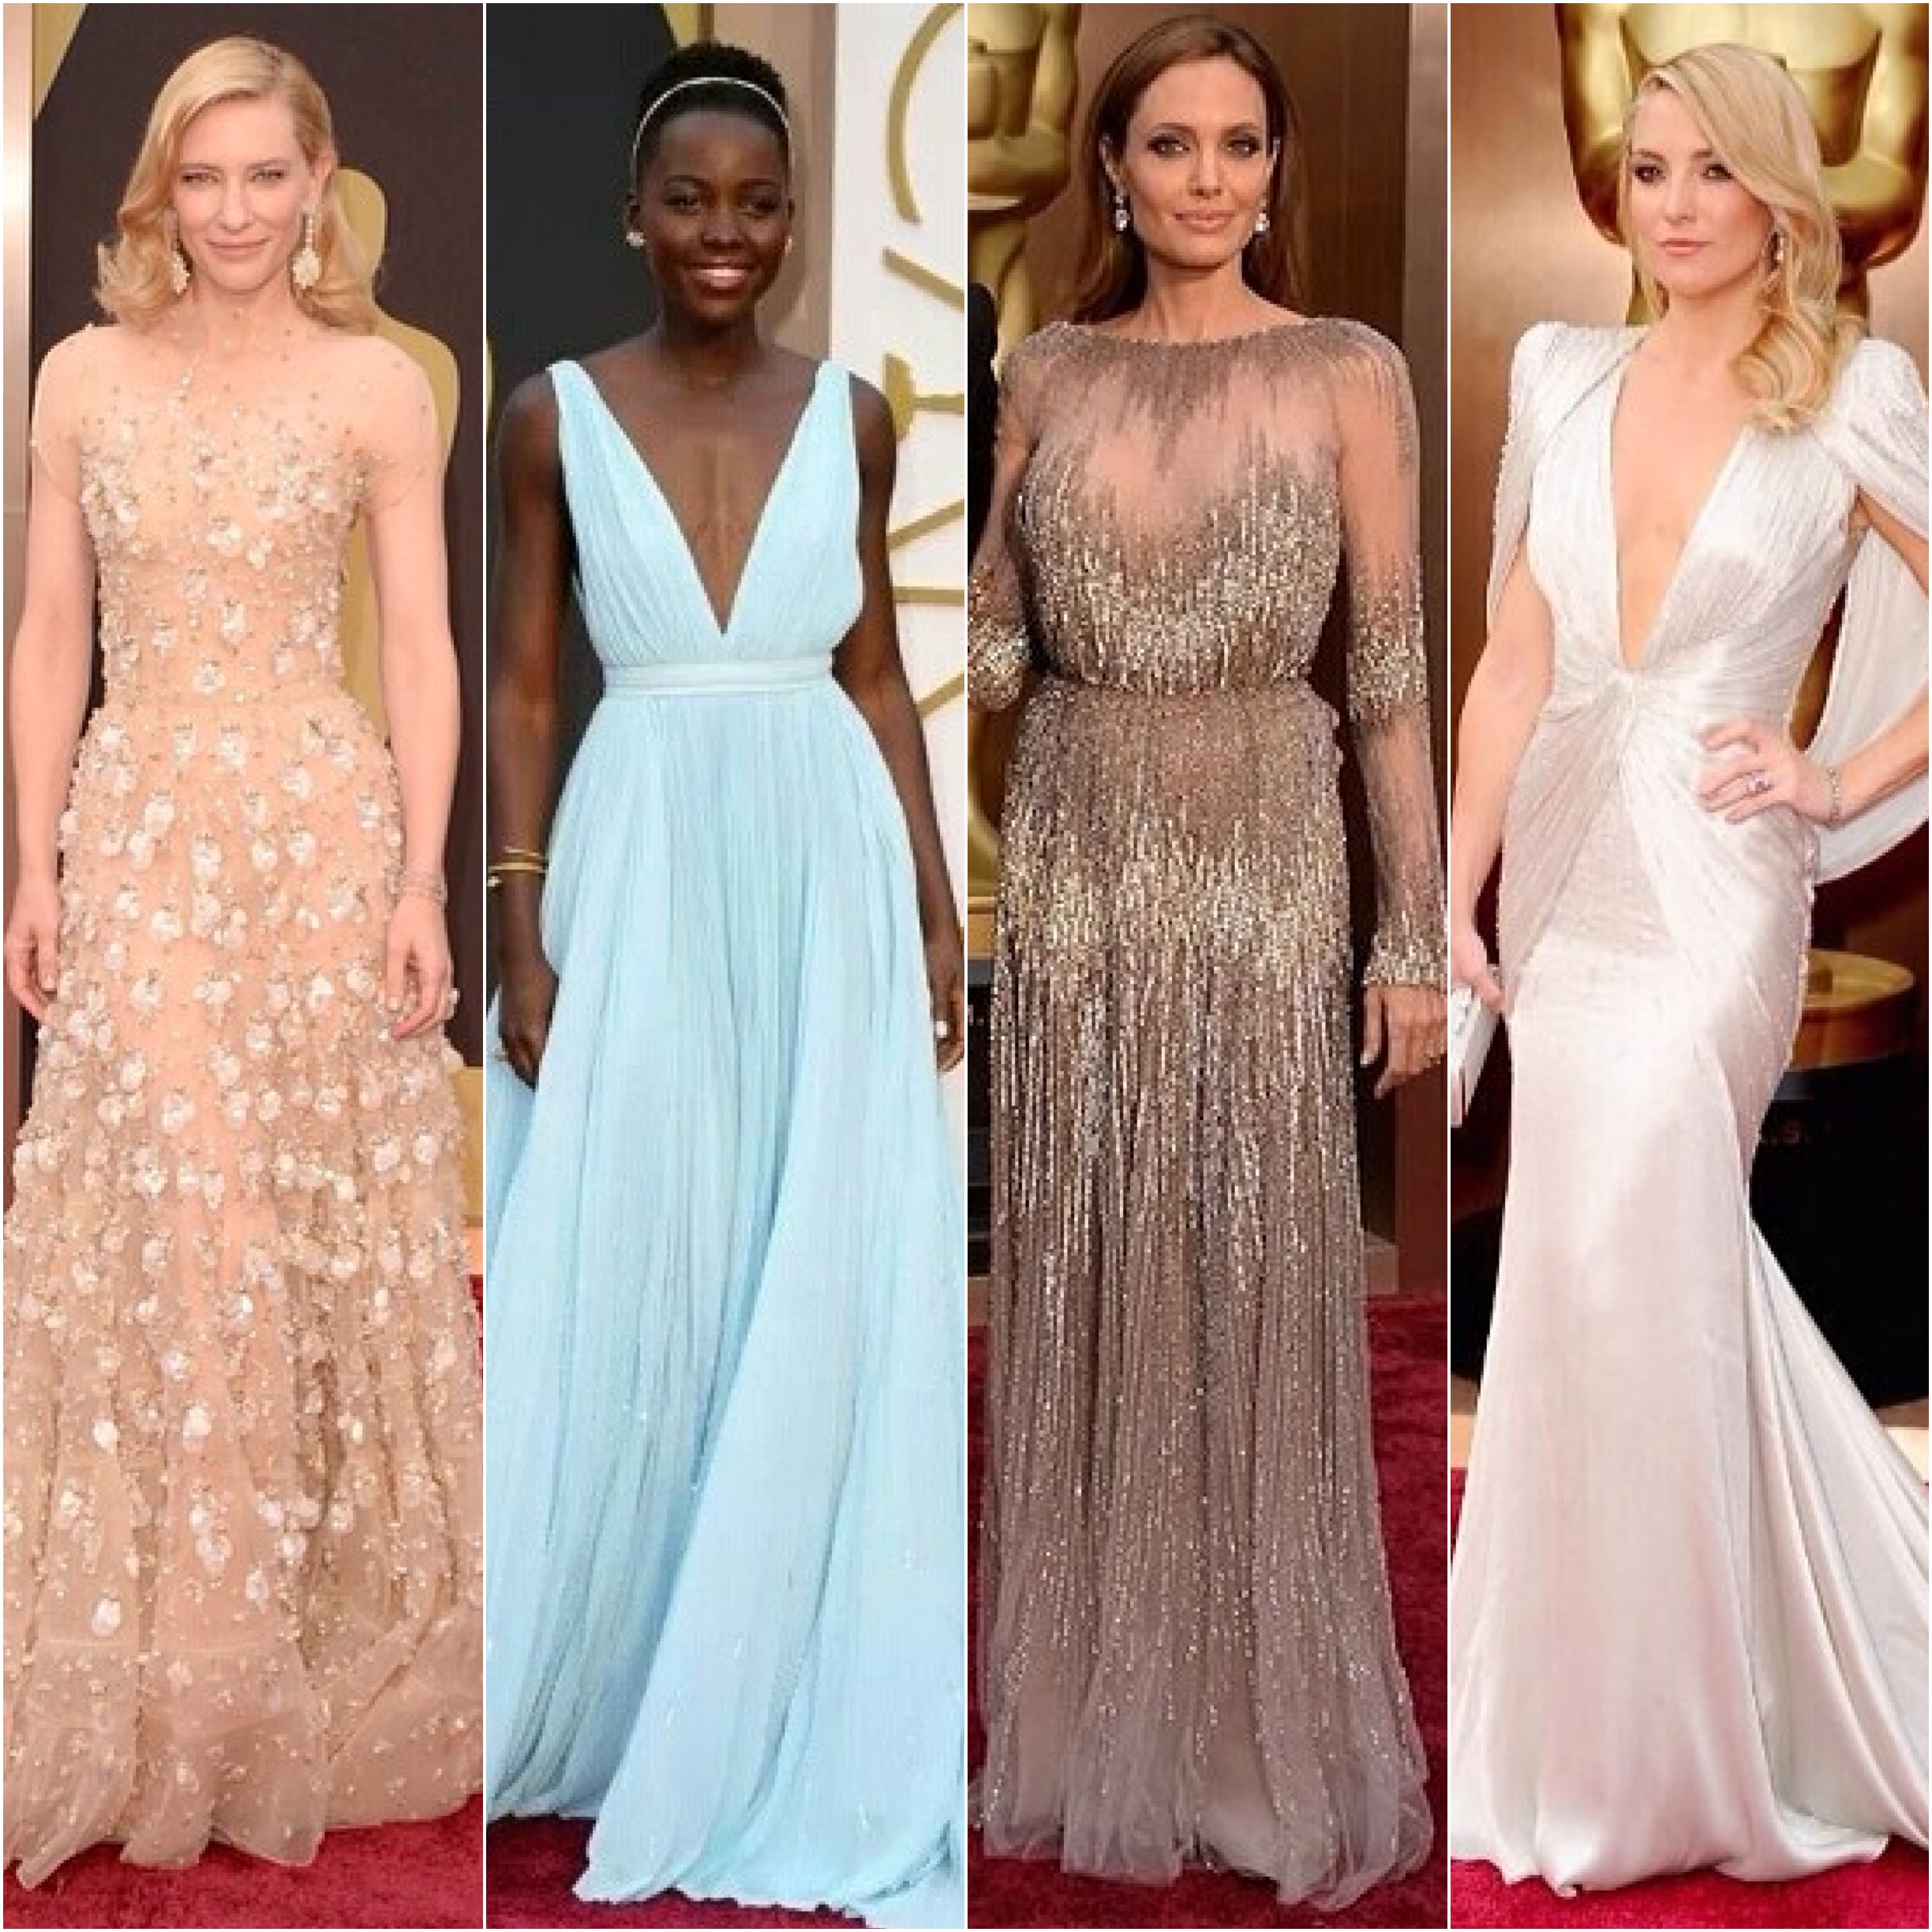 Cate Blanchett in Armani Prive, Lupita Nyong'o in Prada, Angelina Jolie in Elie Saab, and Kate Hudson in Versace